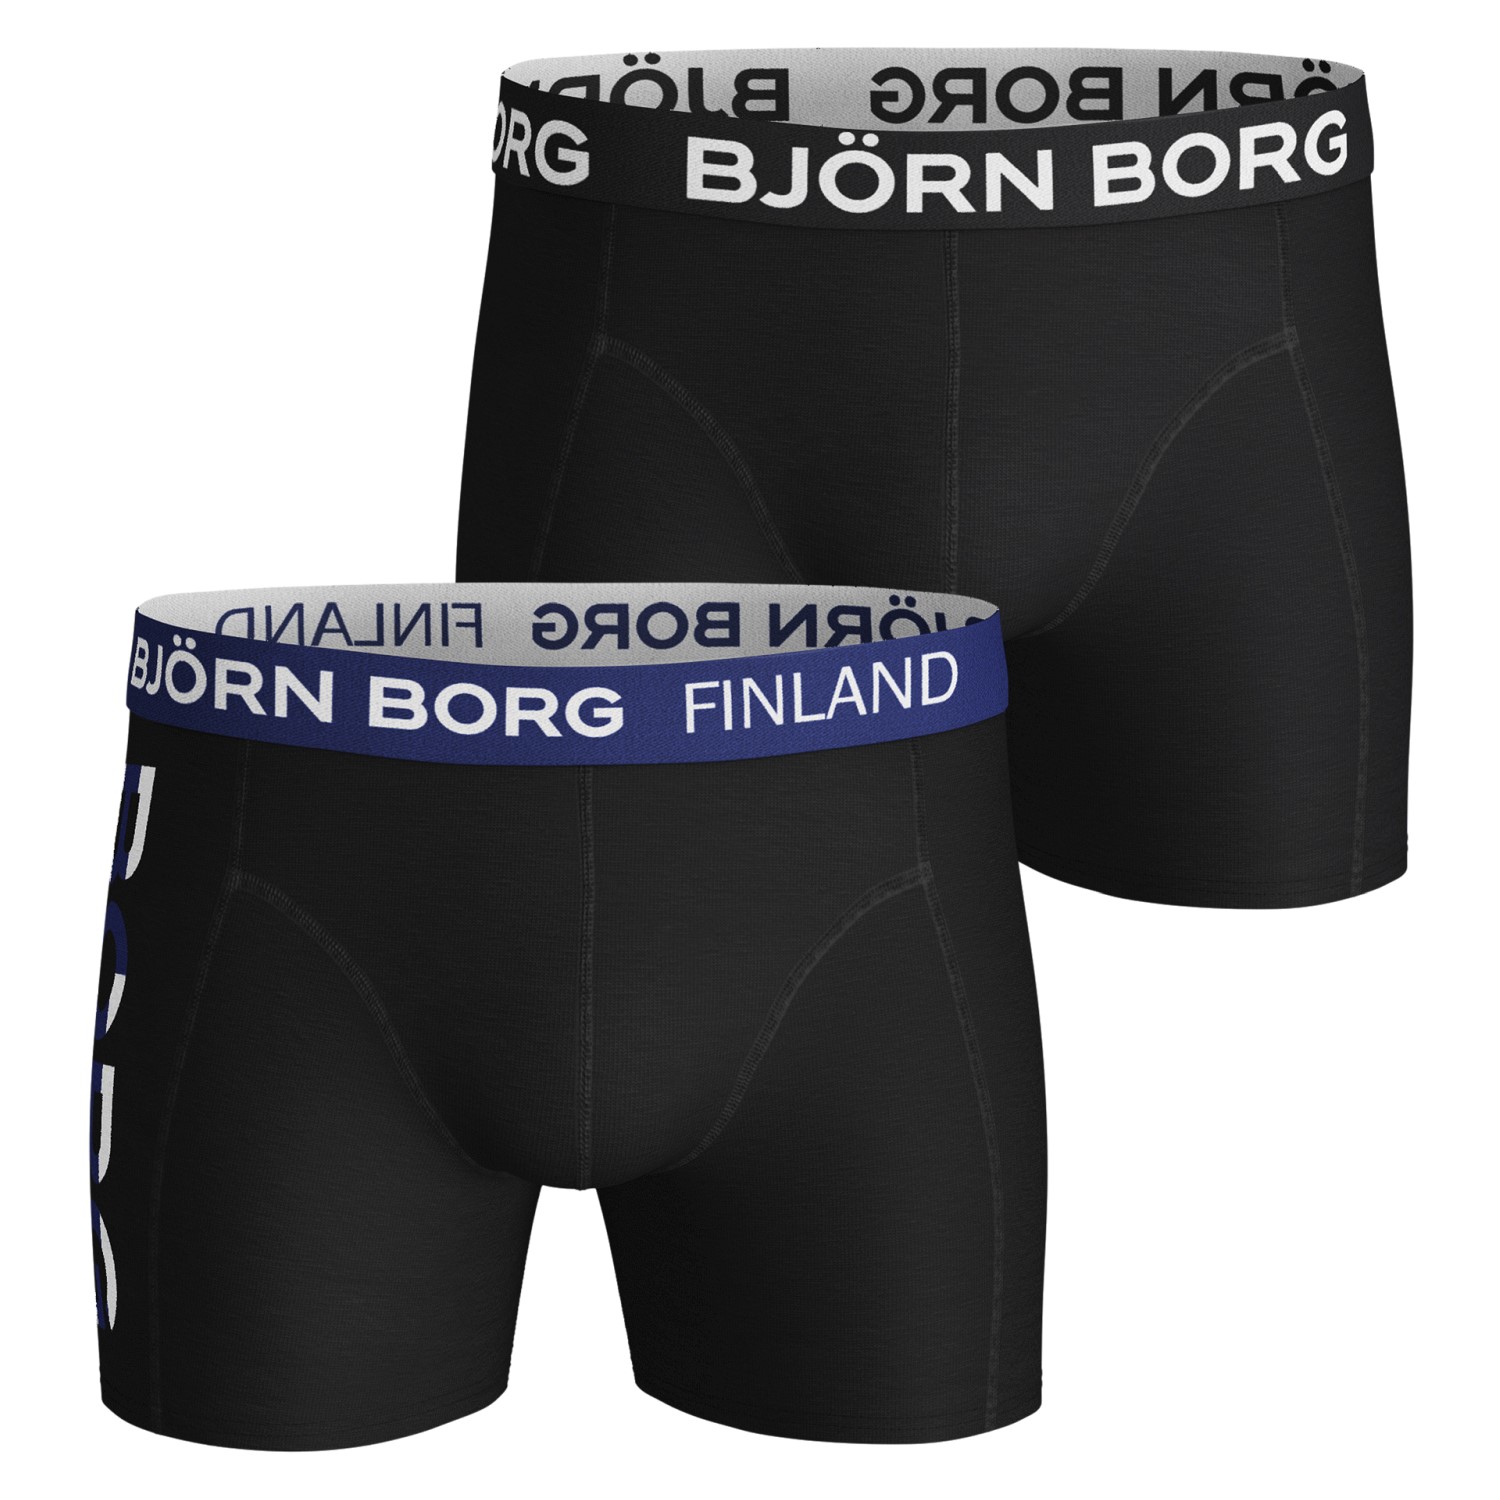 Björn Borg Nations Cotton Stretch Shorts Finland